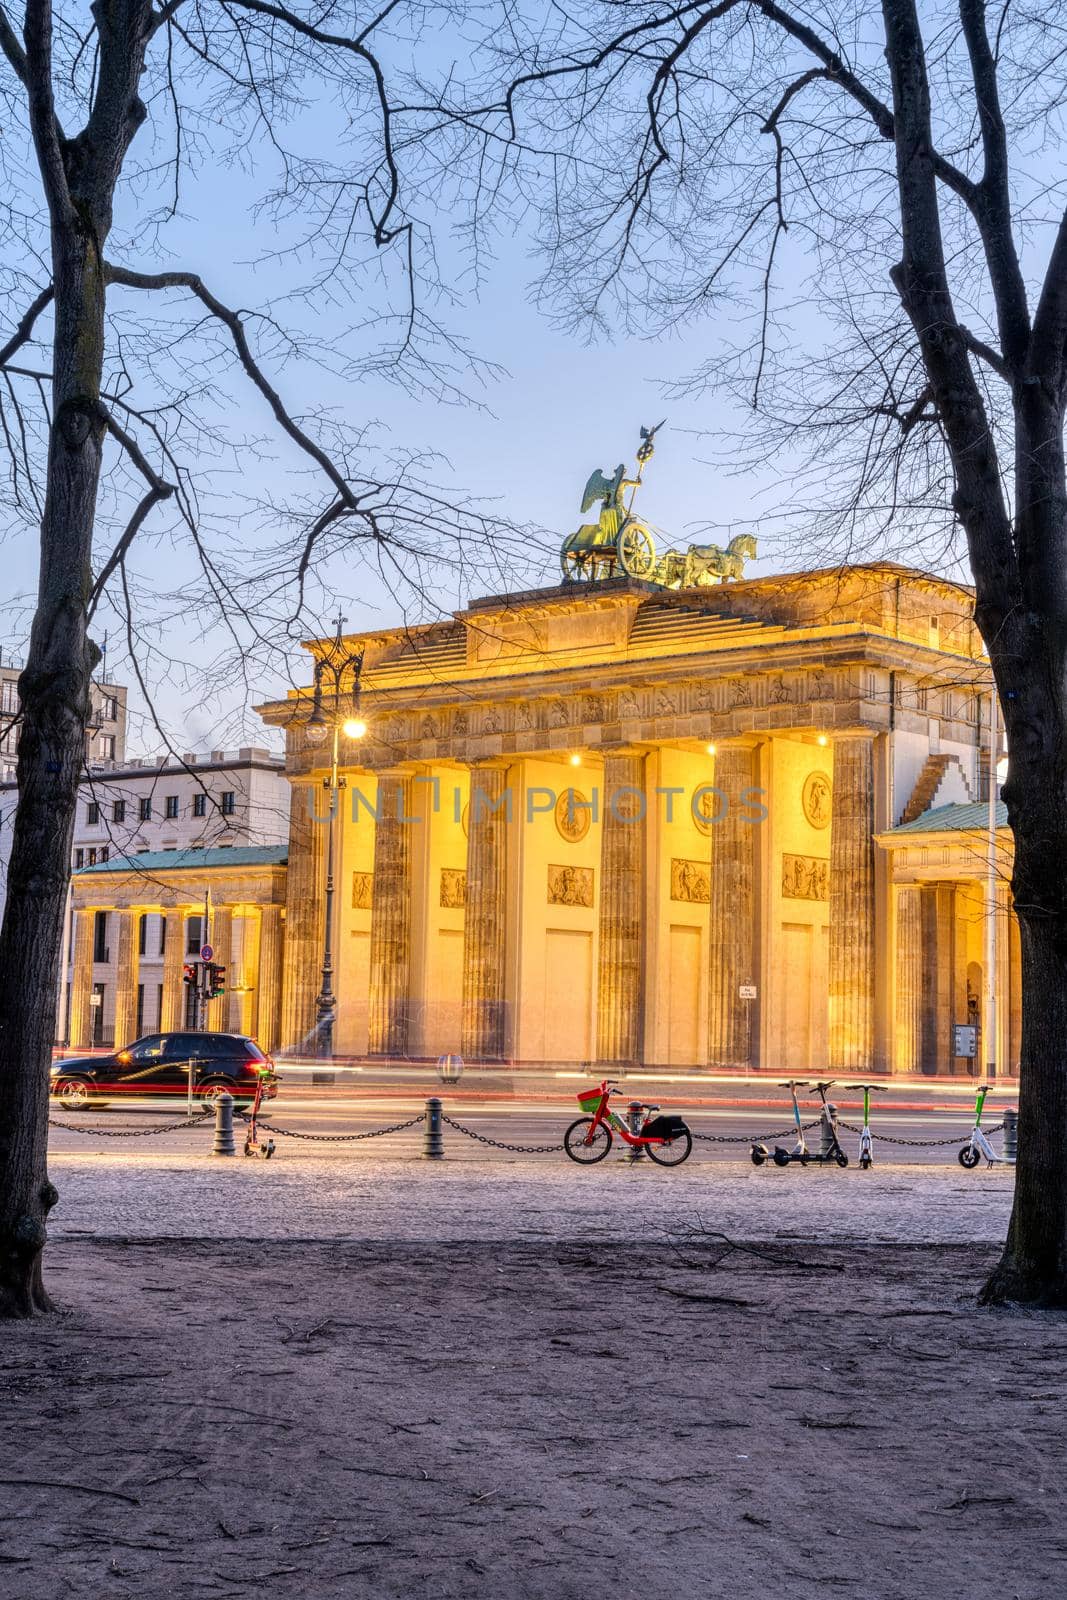 The Brandenburg Gate in Berlin early in the morning by elxeneize